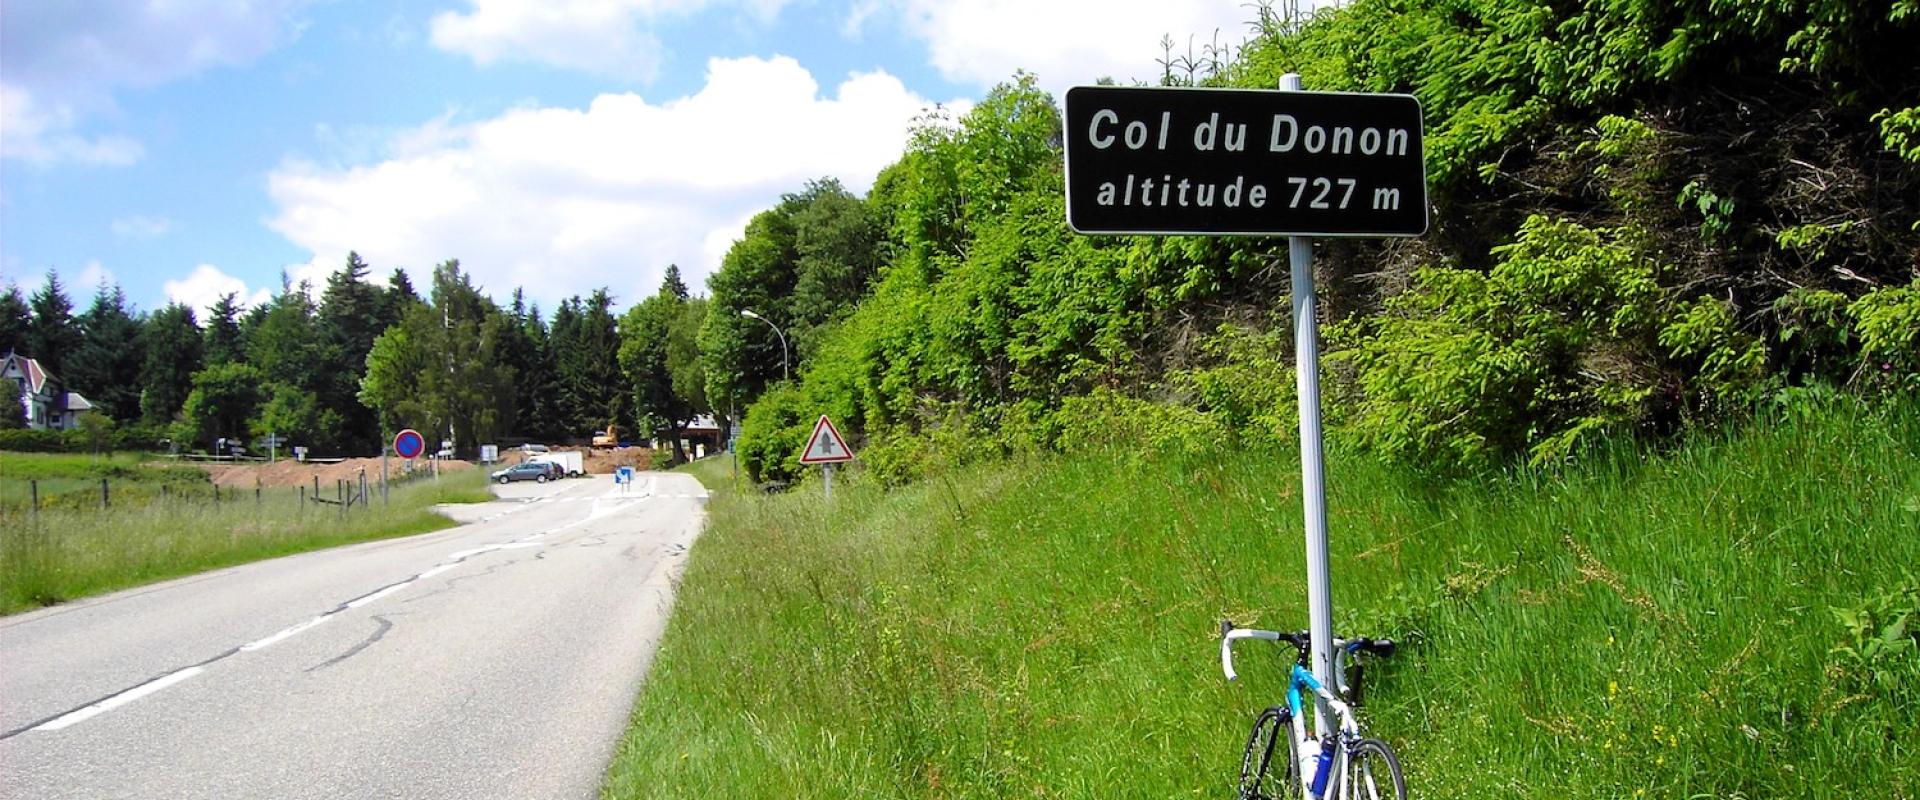 Col du Donon 